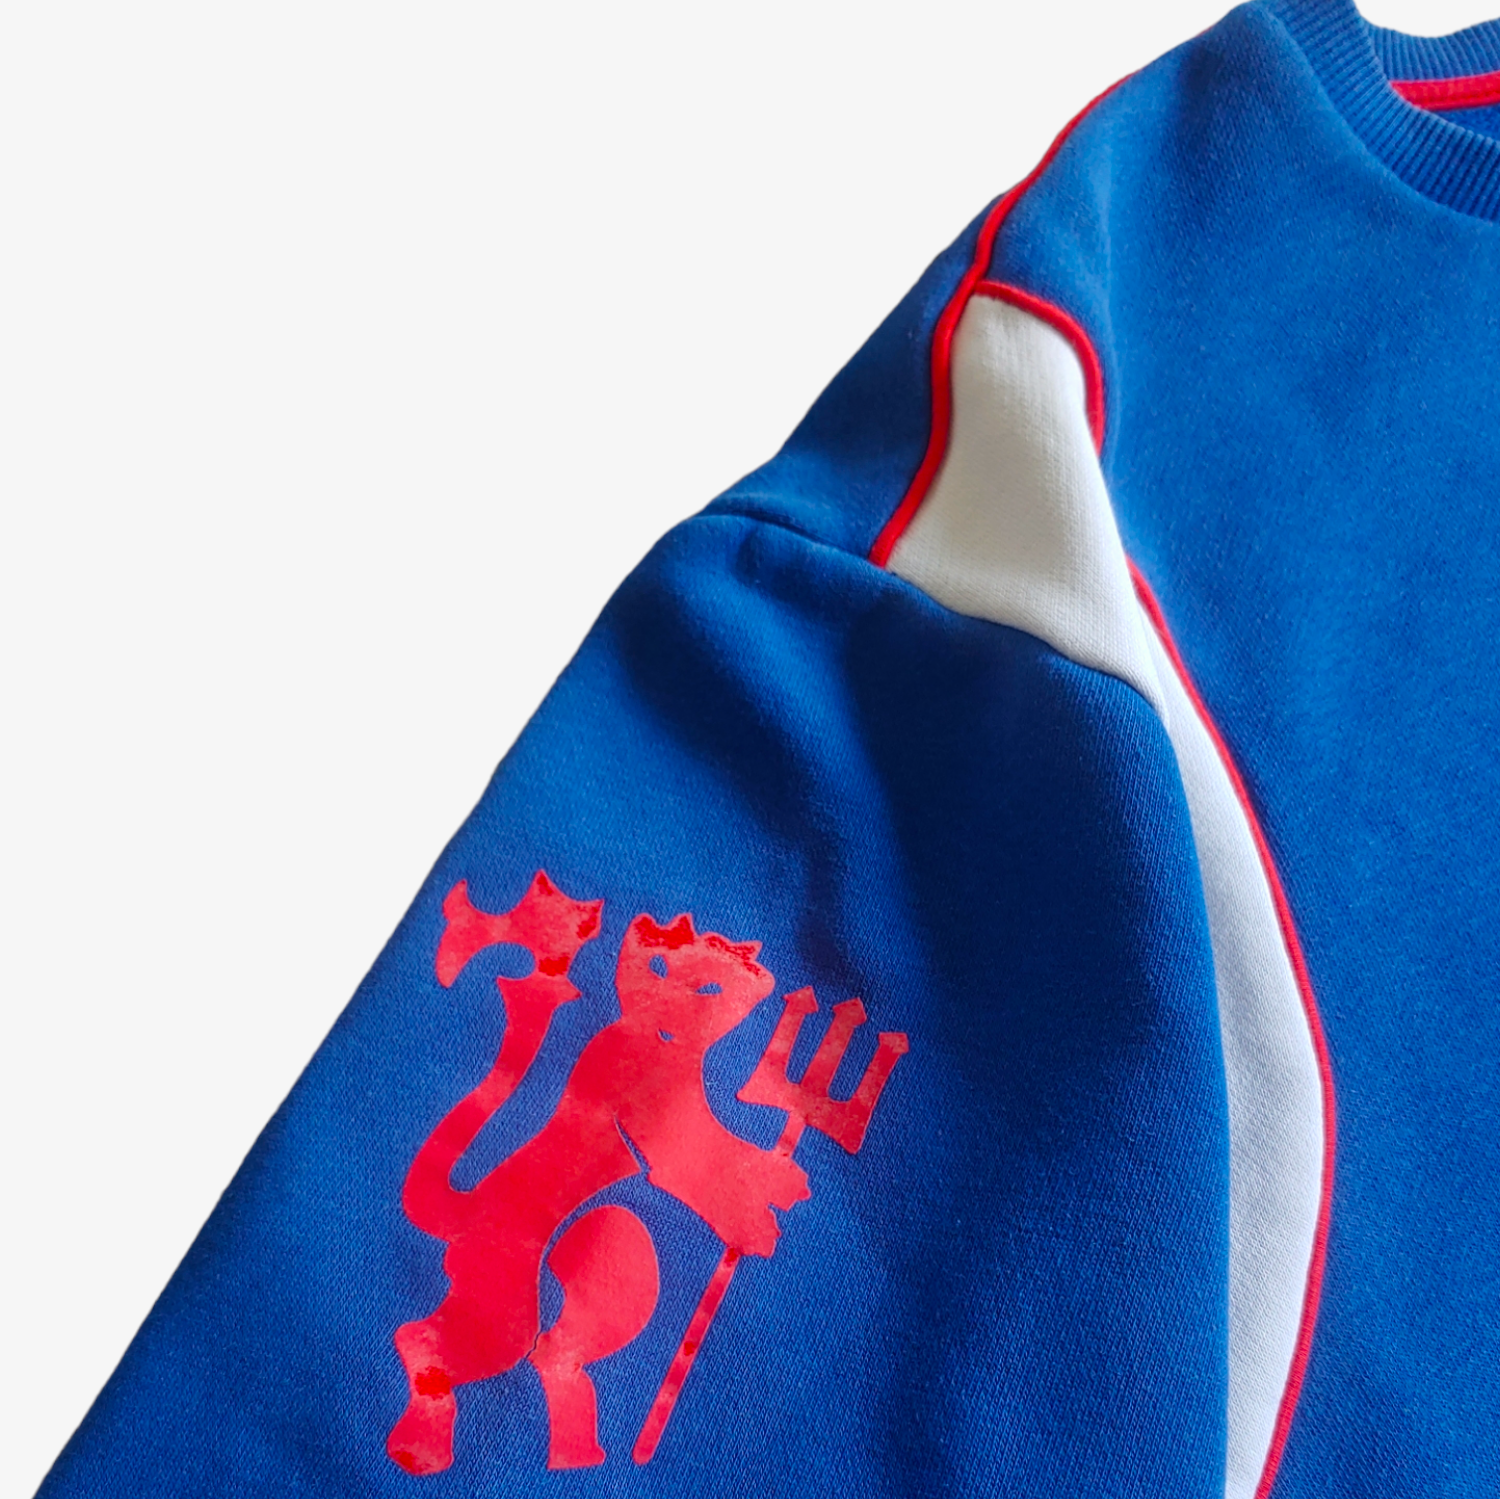 Retro Adidas Originals Manchester United Football Club Blue Crewneck Sweatshirt Crest - Casspios Dream